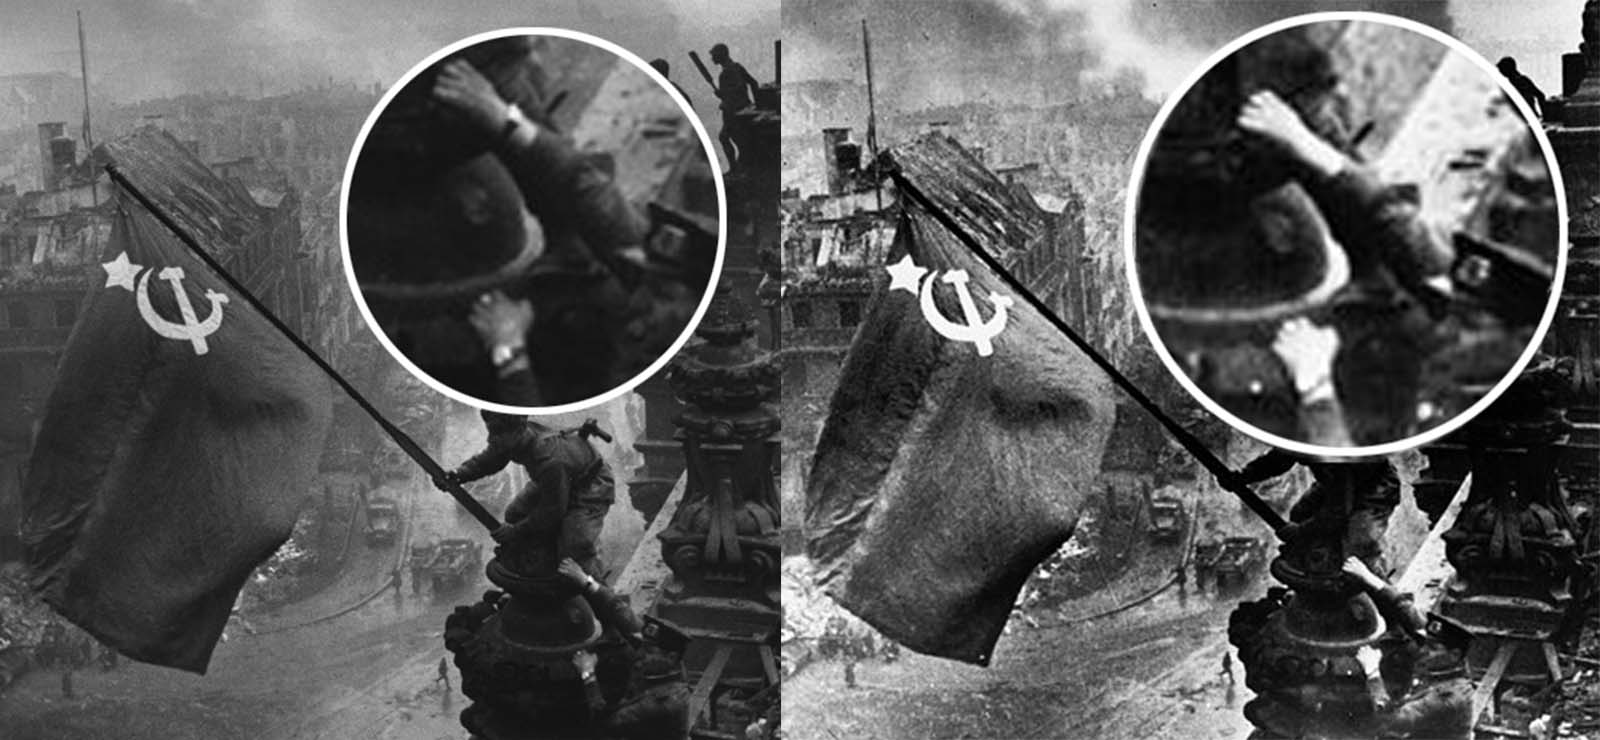 MGSHN Khaldei War WWII URSS Bandera sobre el Reichstag p/óster art/ístico Lienzo Pintura p/óster Arte Obra de Arte /única 60x80cm sin Marco